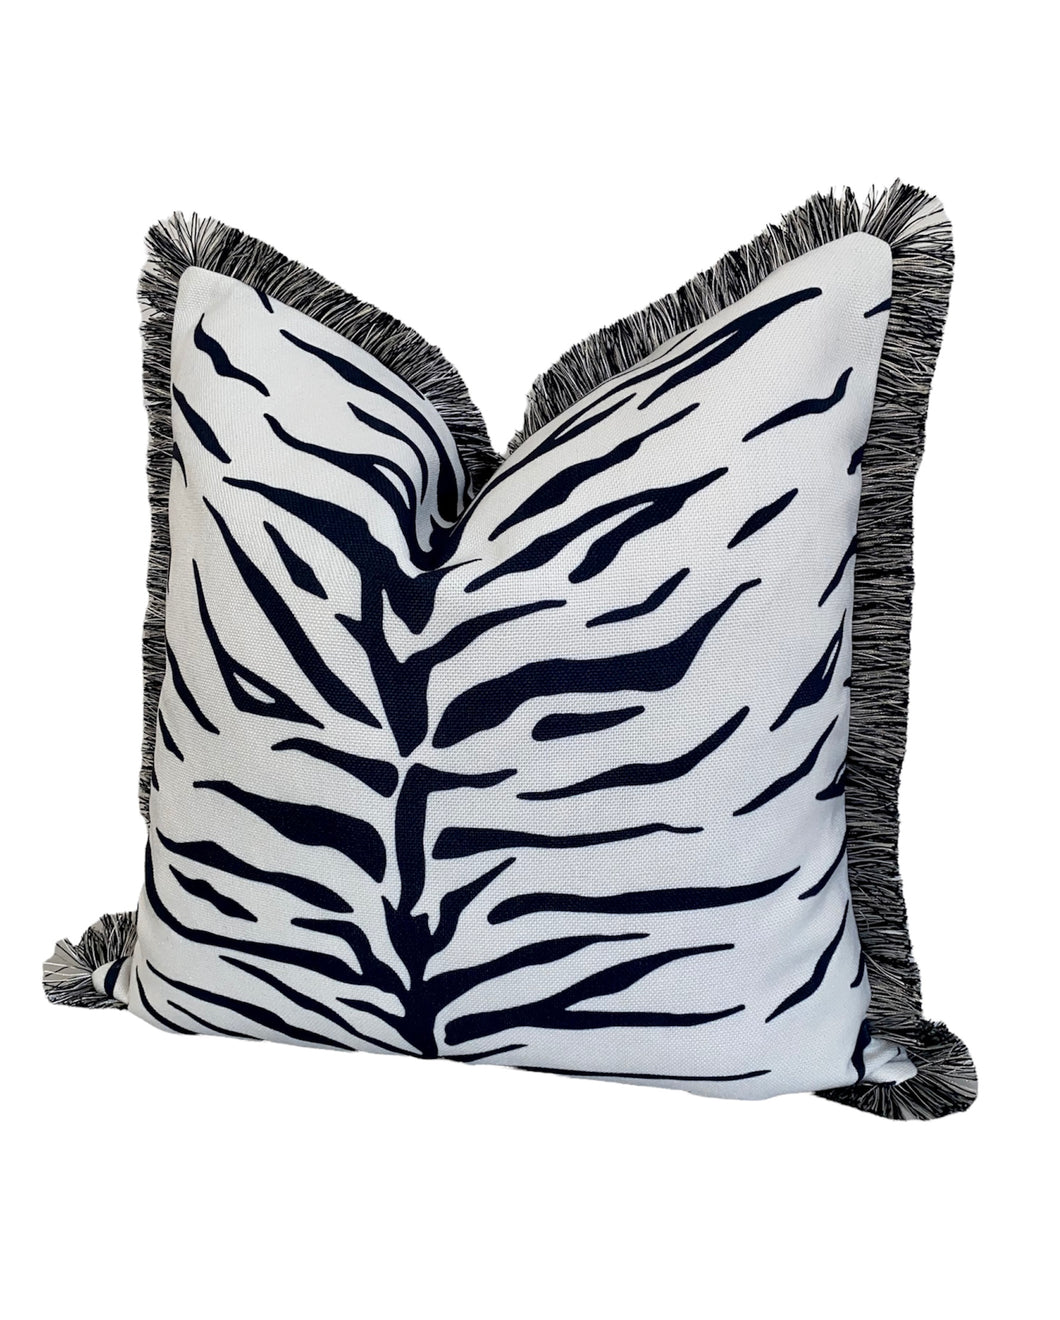 Zebra Animal Print Black and White Monochrome Cushion Cover Pillow Black and White Fringe Plain No Crystals